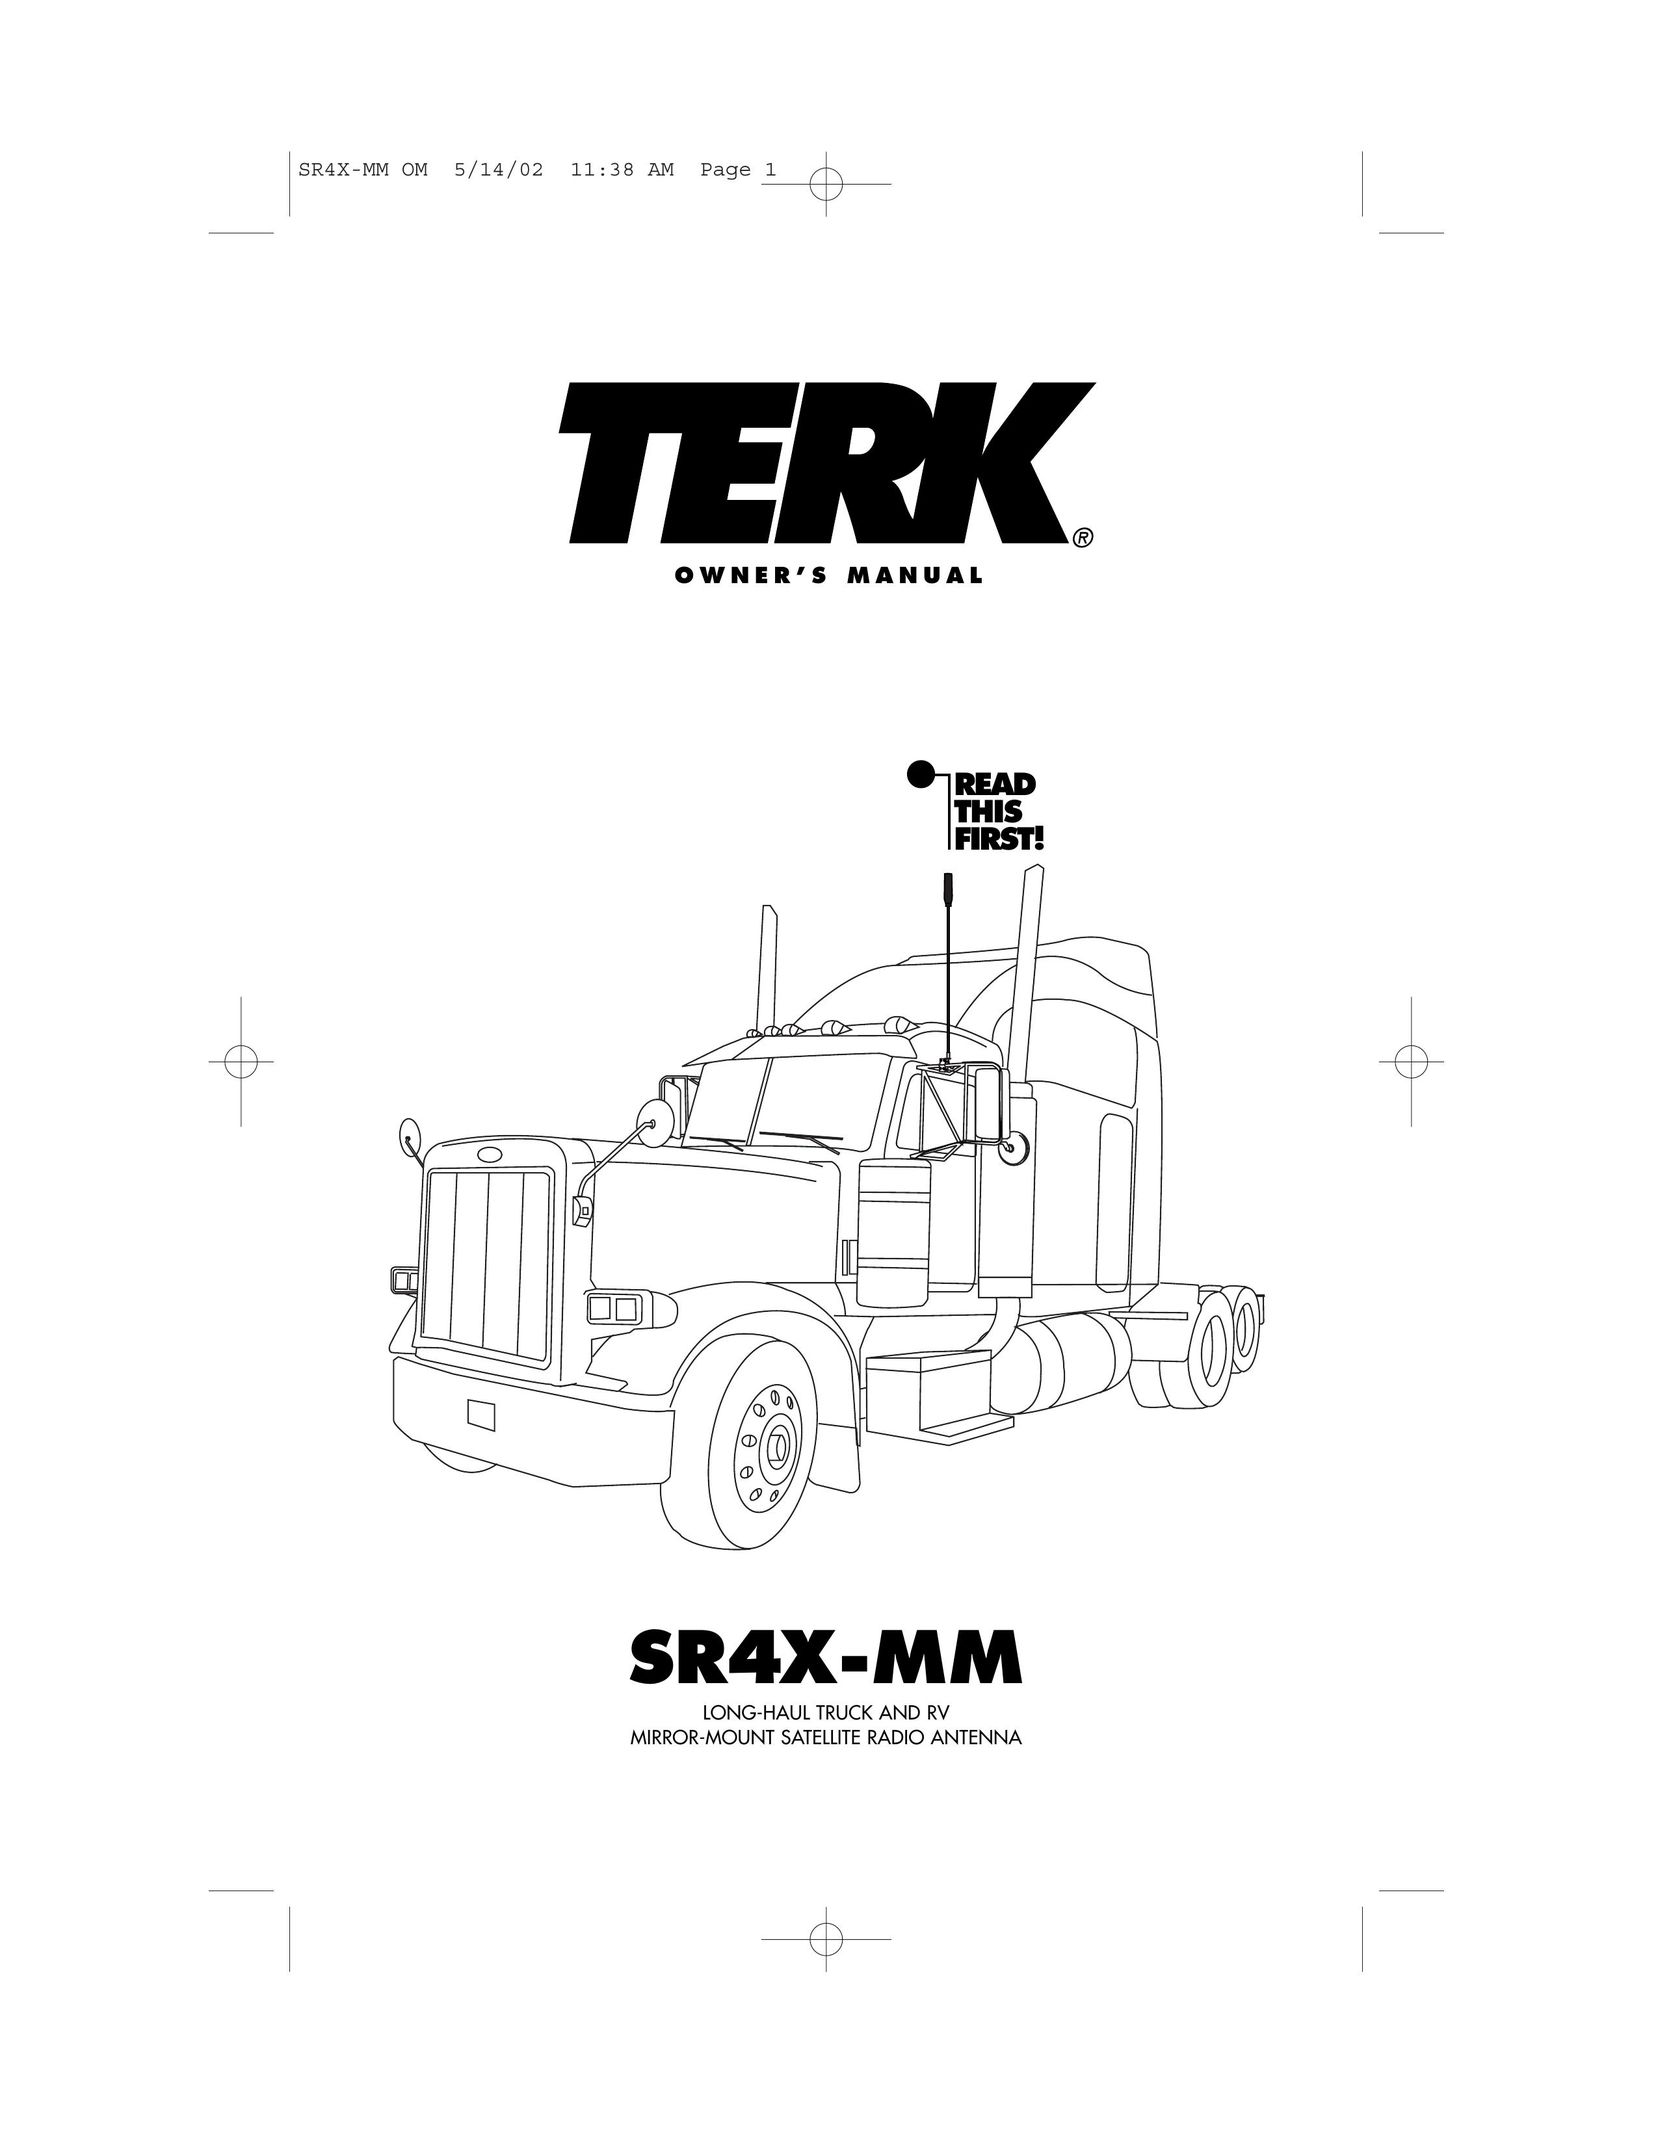 TERK Technologies MM Satellite Radio User Manual